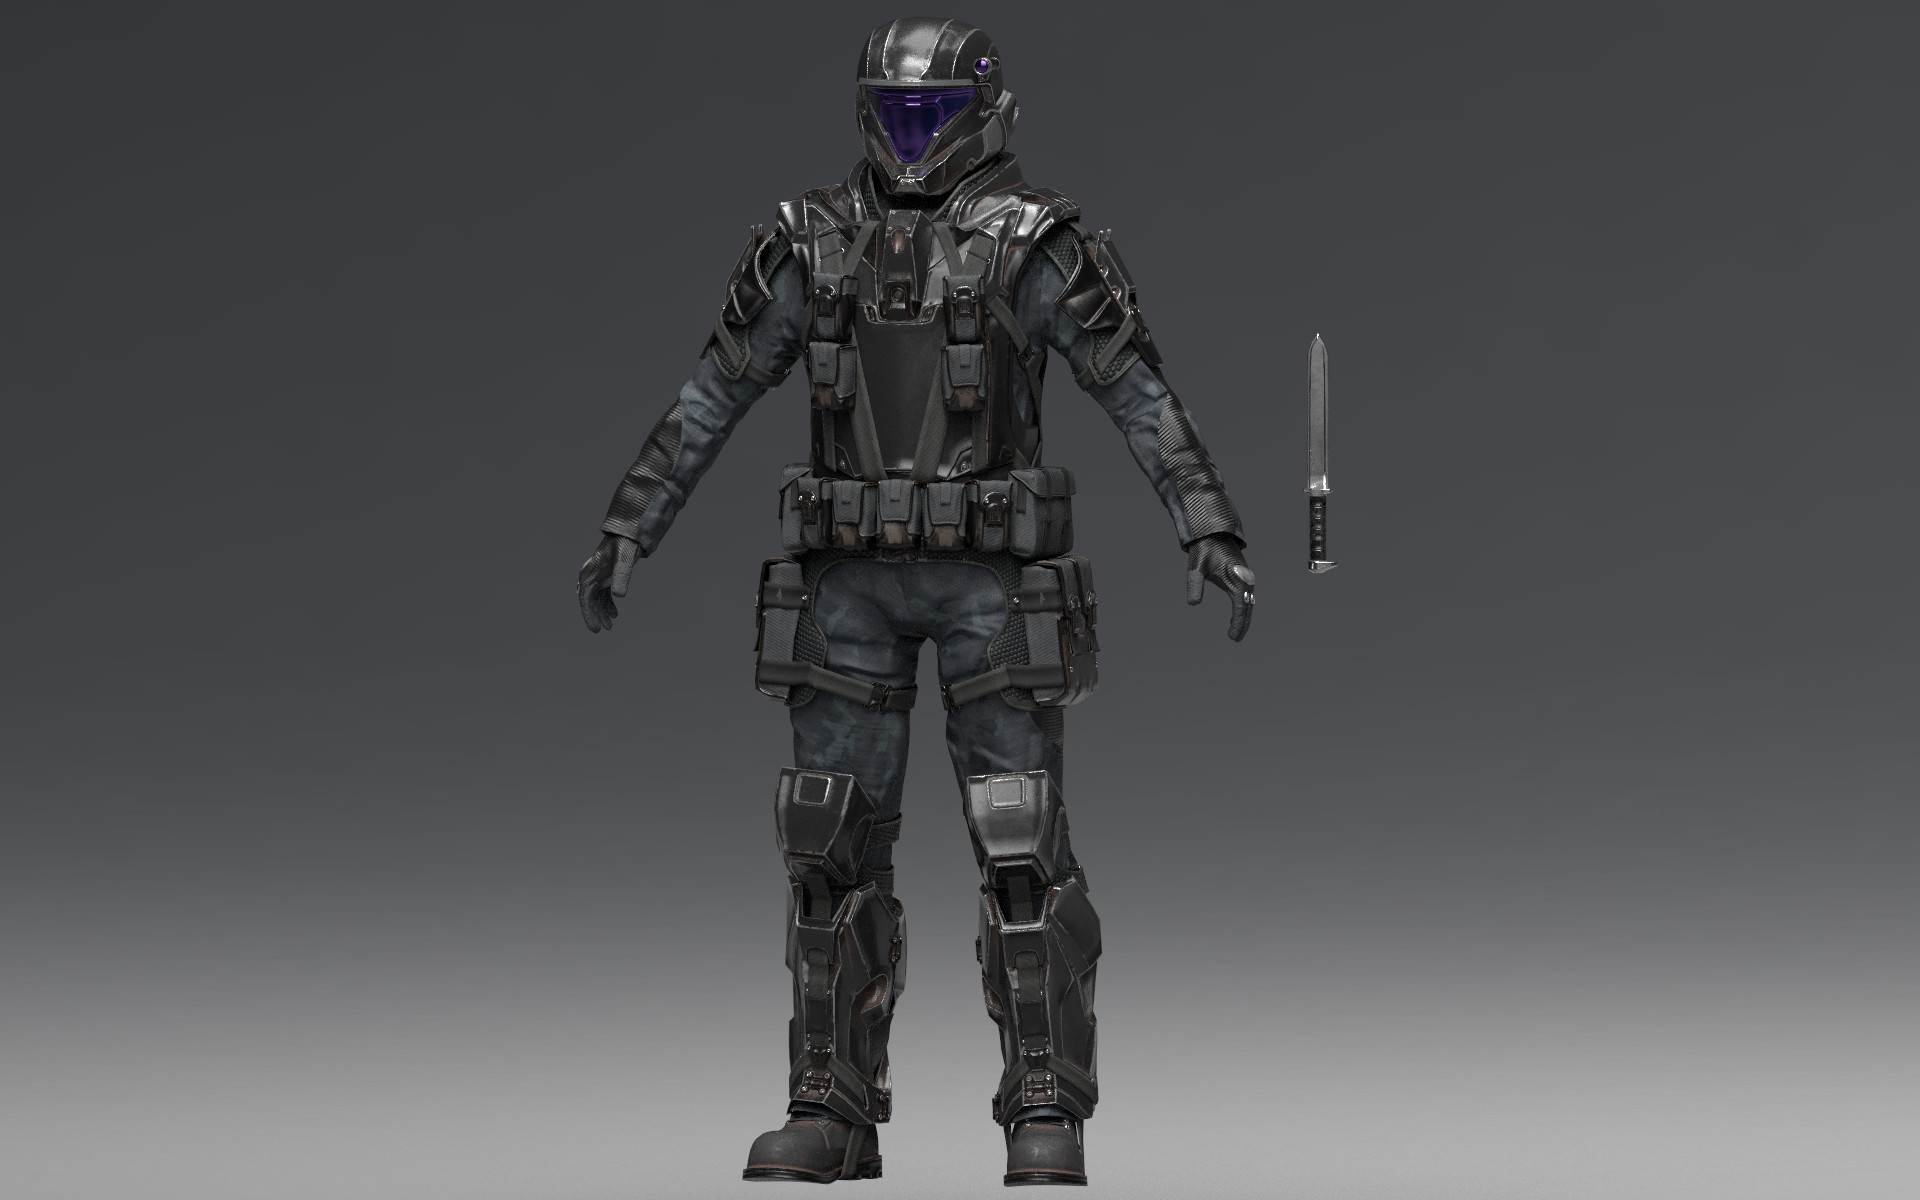 Halo 2: Anniversary build. Halo Costume and Prop Maker Community